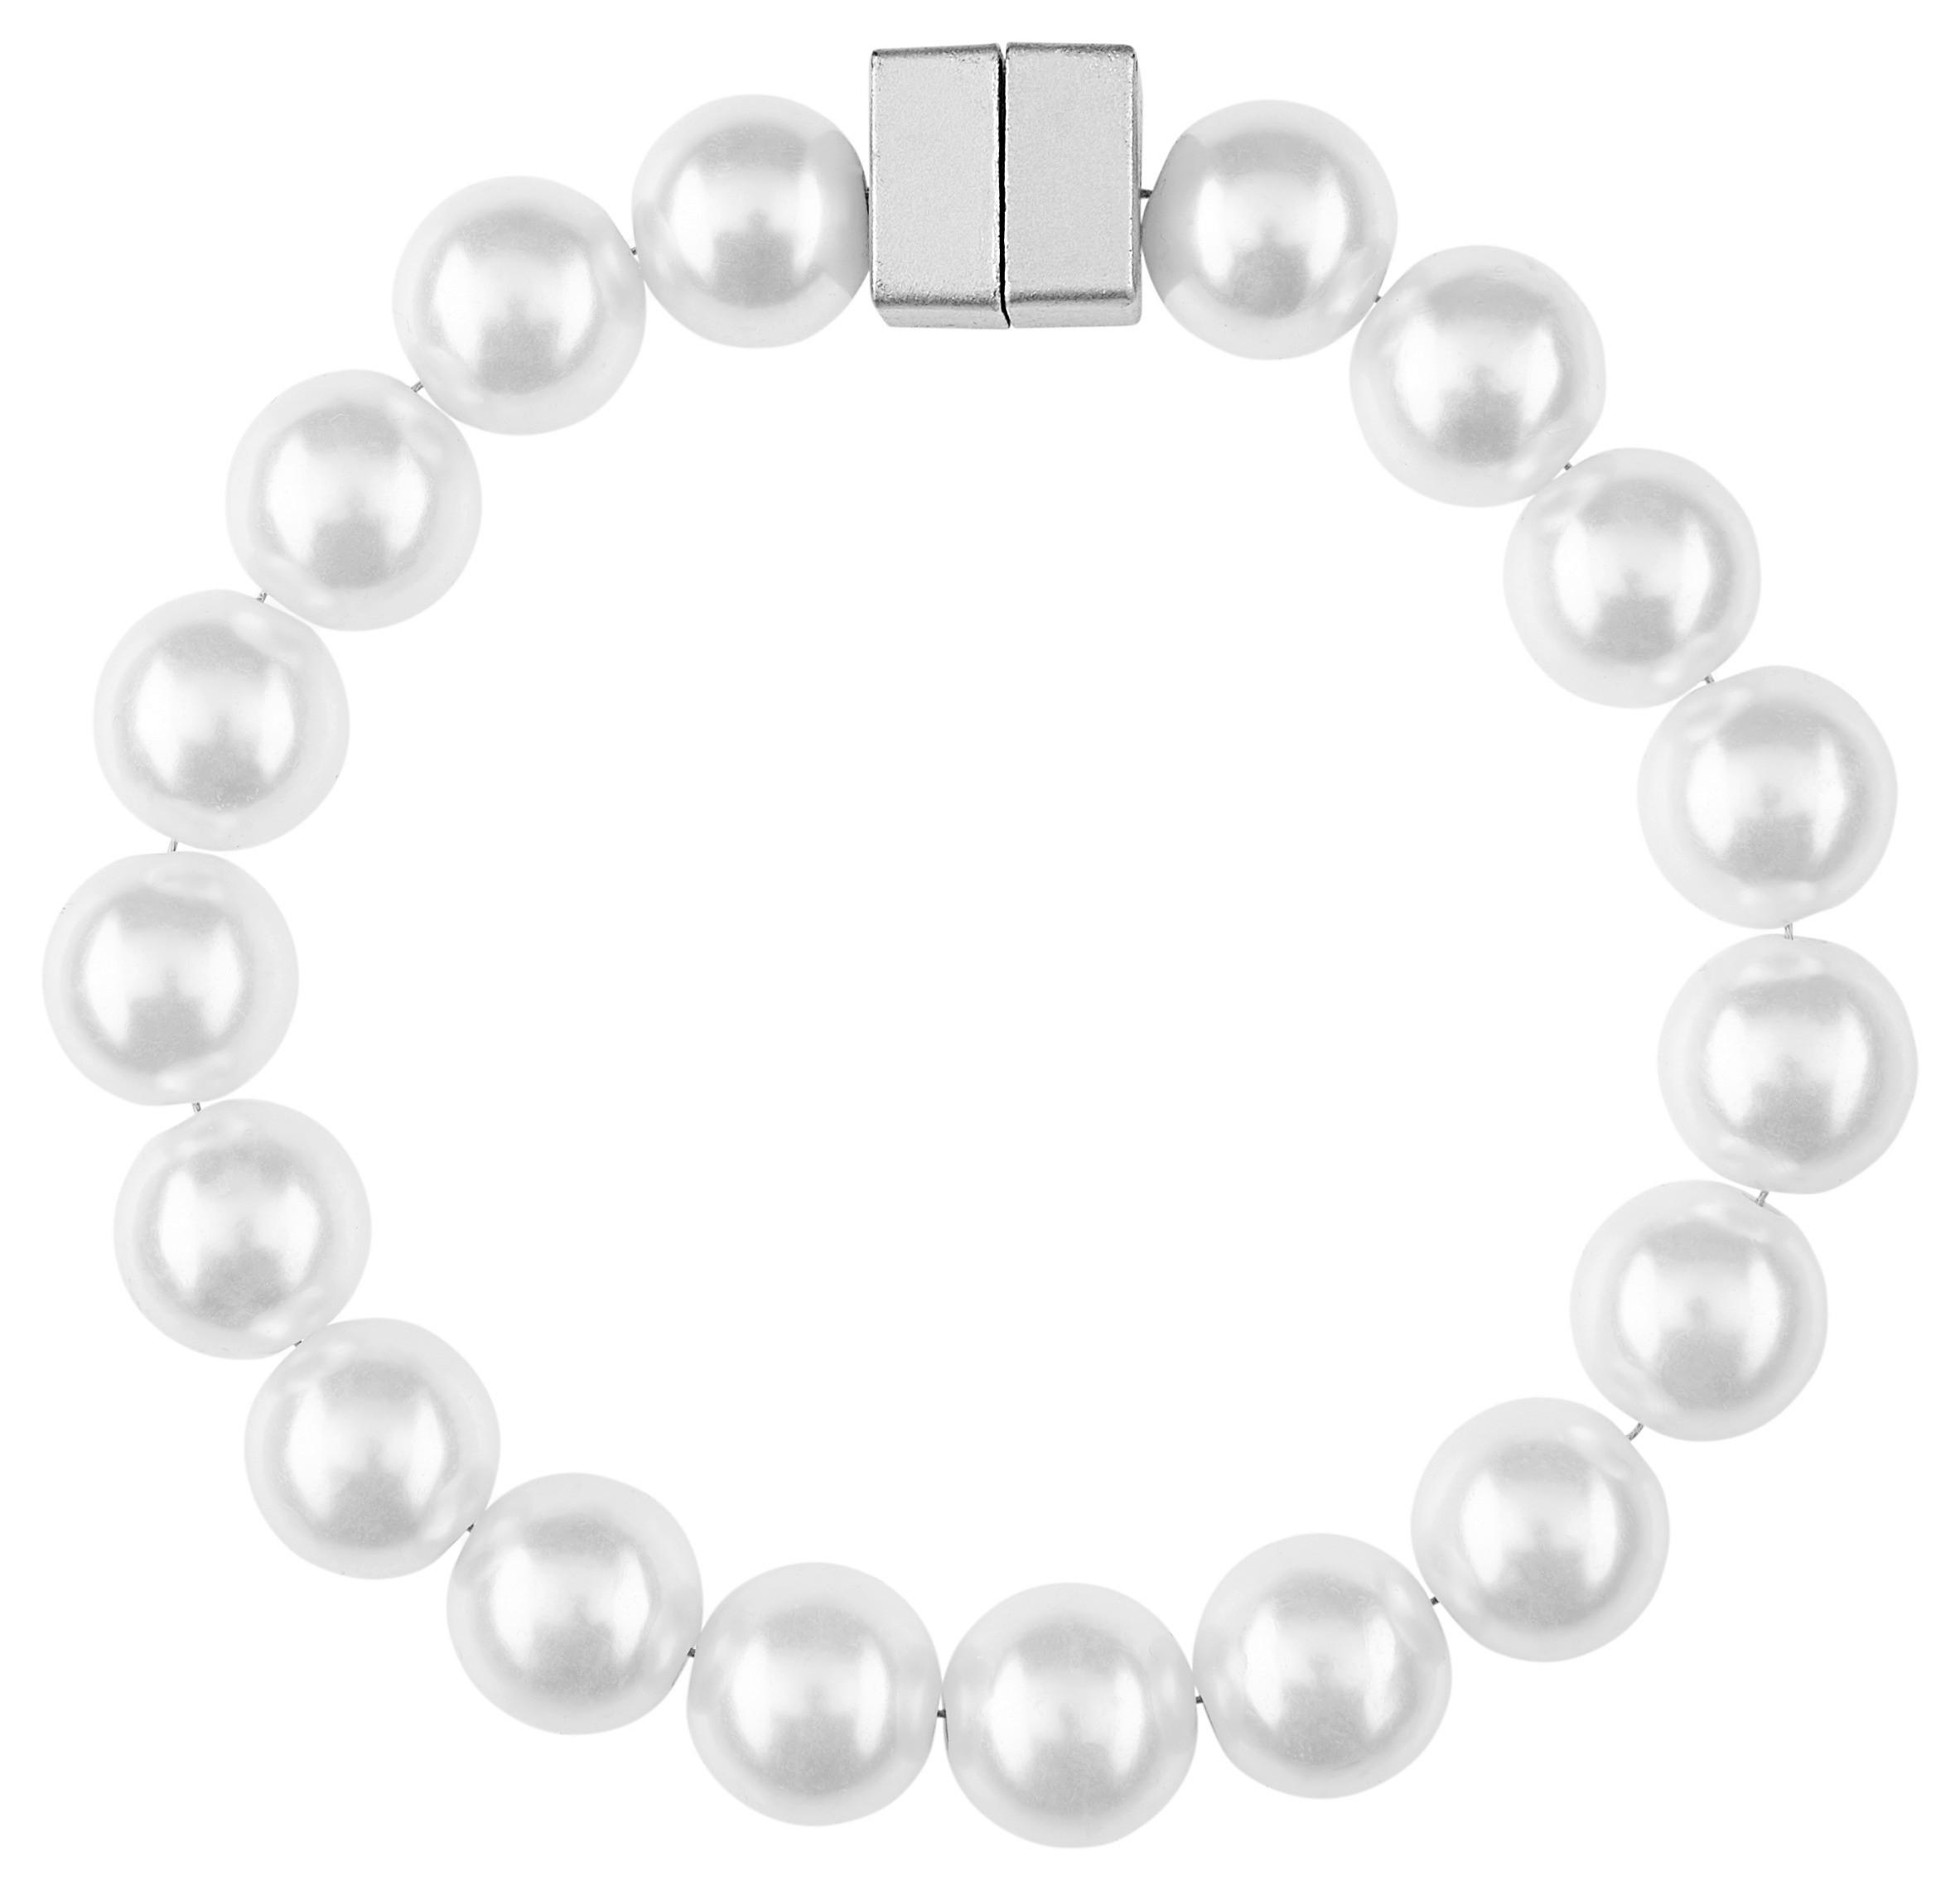 Kopča Za Zavjese Perlenkette - bijela, Romantik / Landhaus, metal/plastika (29cm) - Modern Living